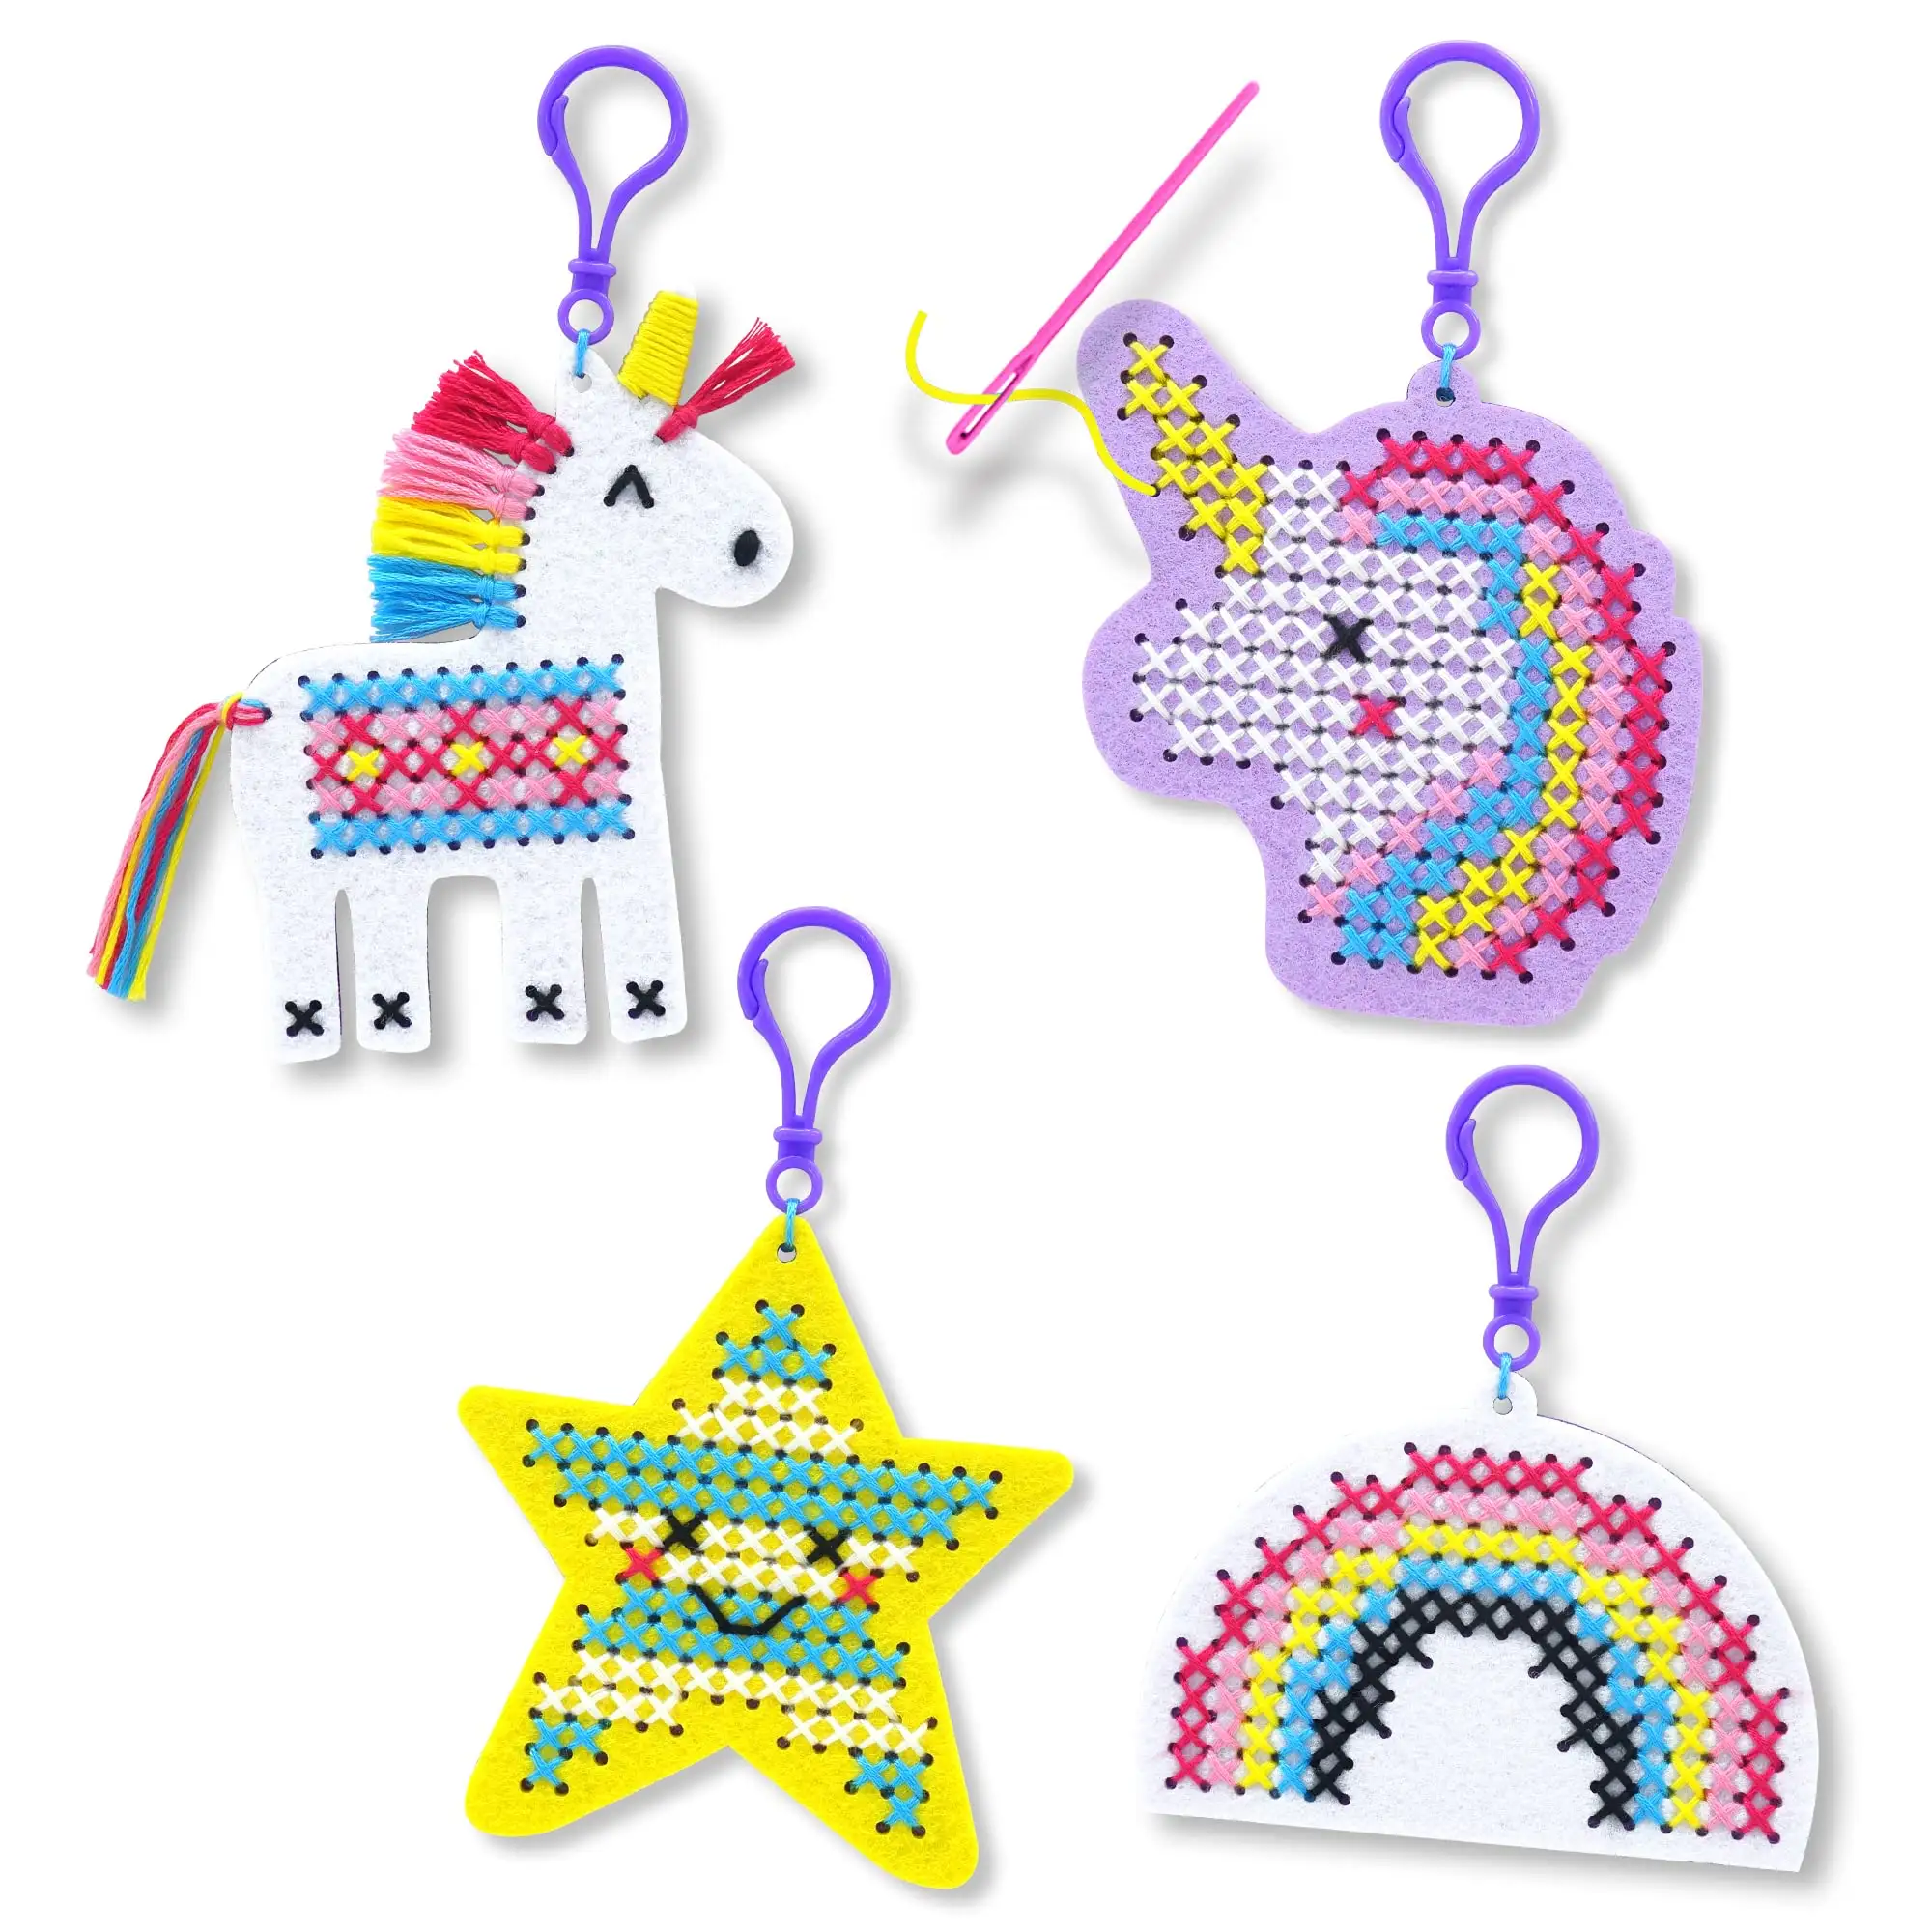 Felt Sewing Cross Stitch Unicorn Needlepoint Embroidery Key Ring Set Kit For Ornaments